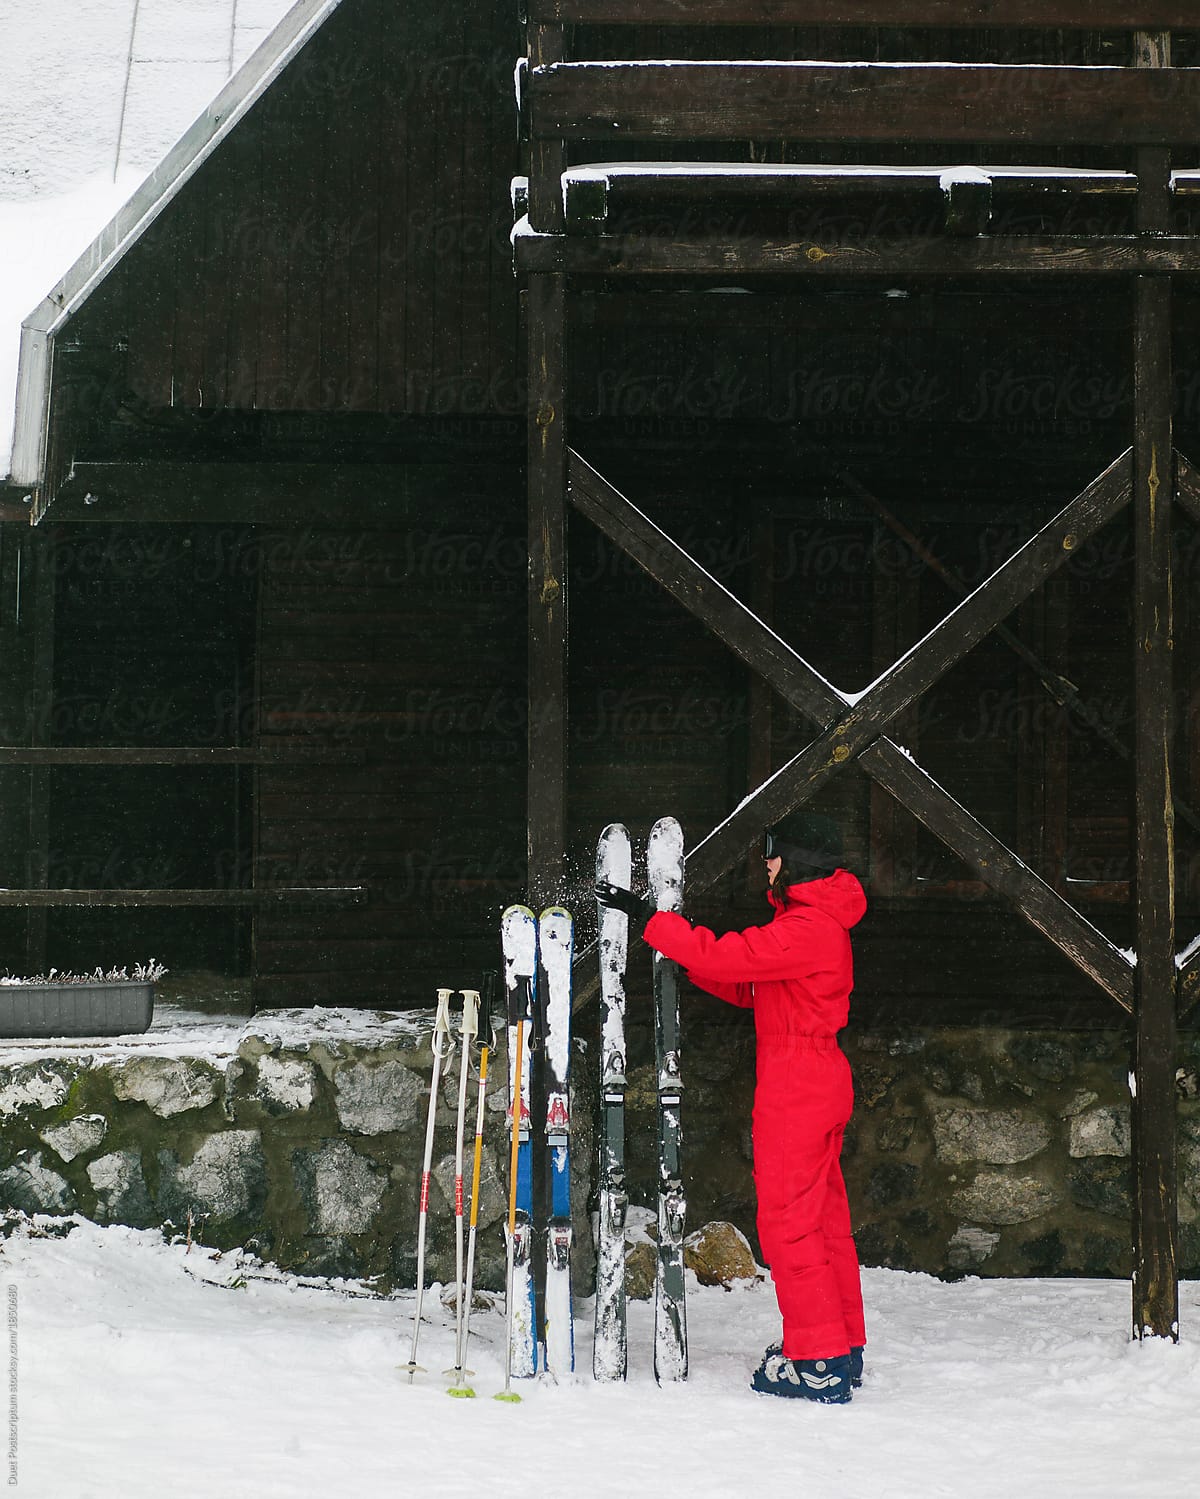 Woman placing ski in snow